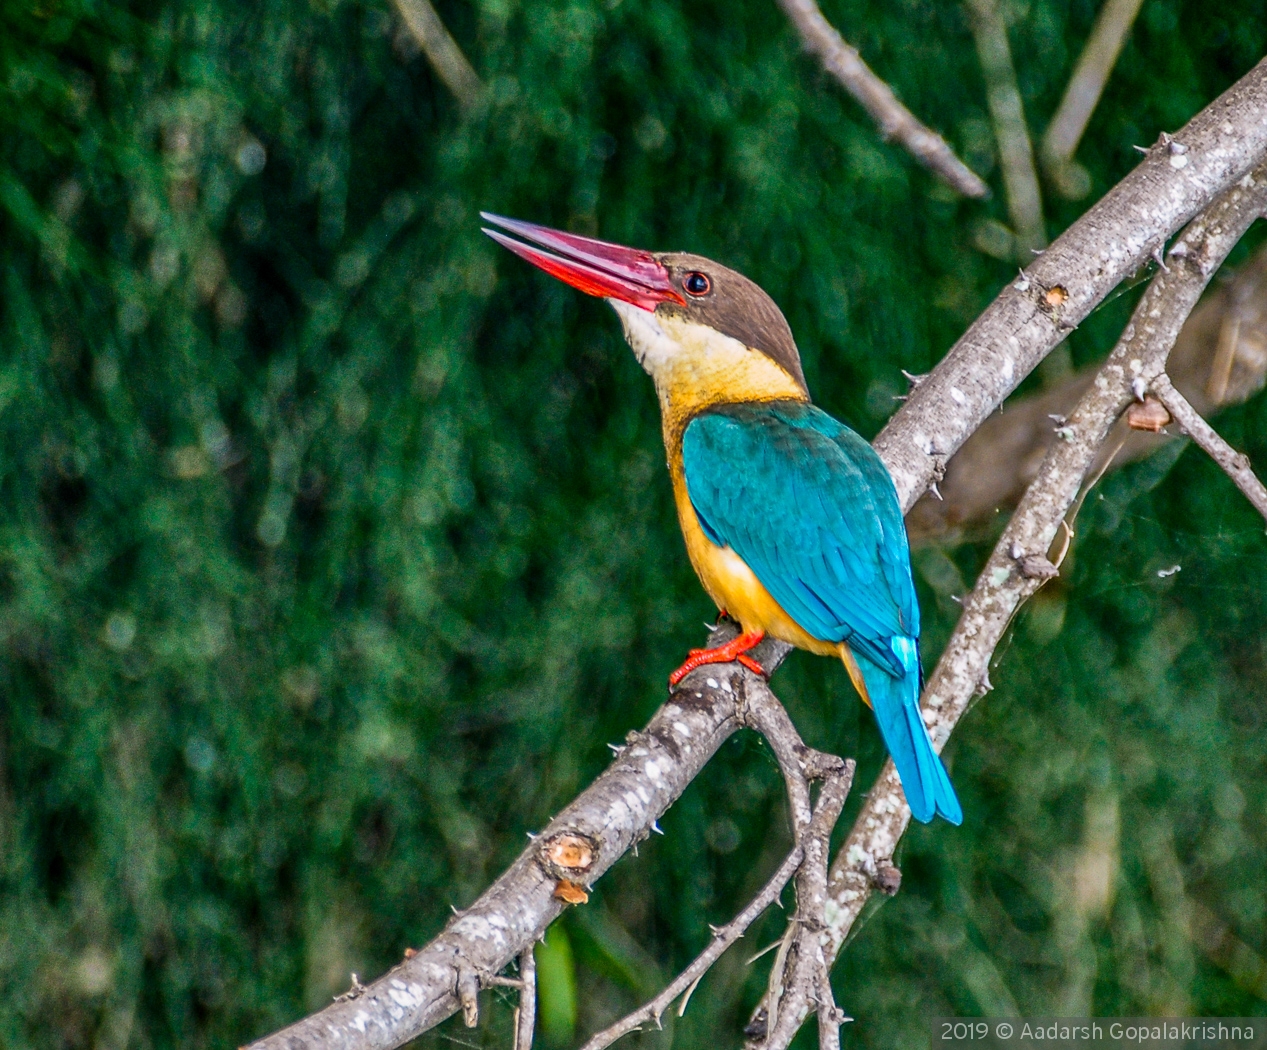 Stork-billed Kingfisher by Aadarsh Gopalakrishna